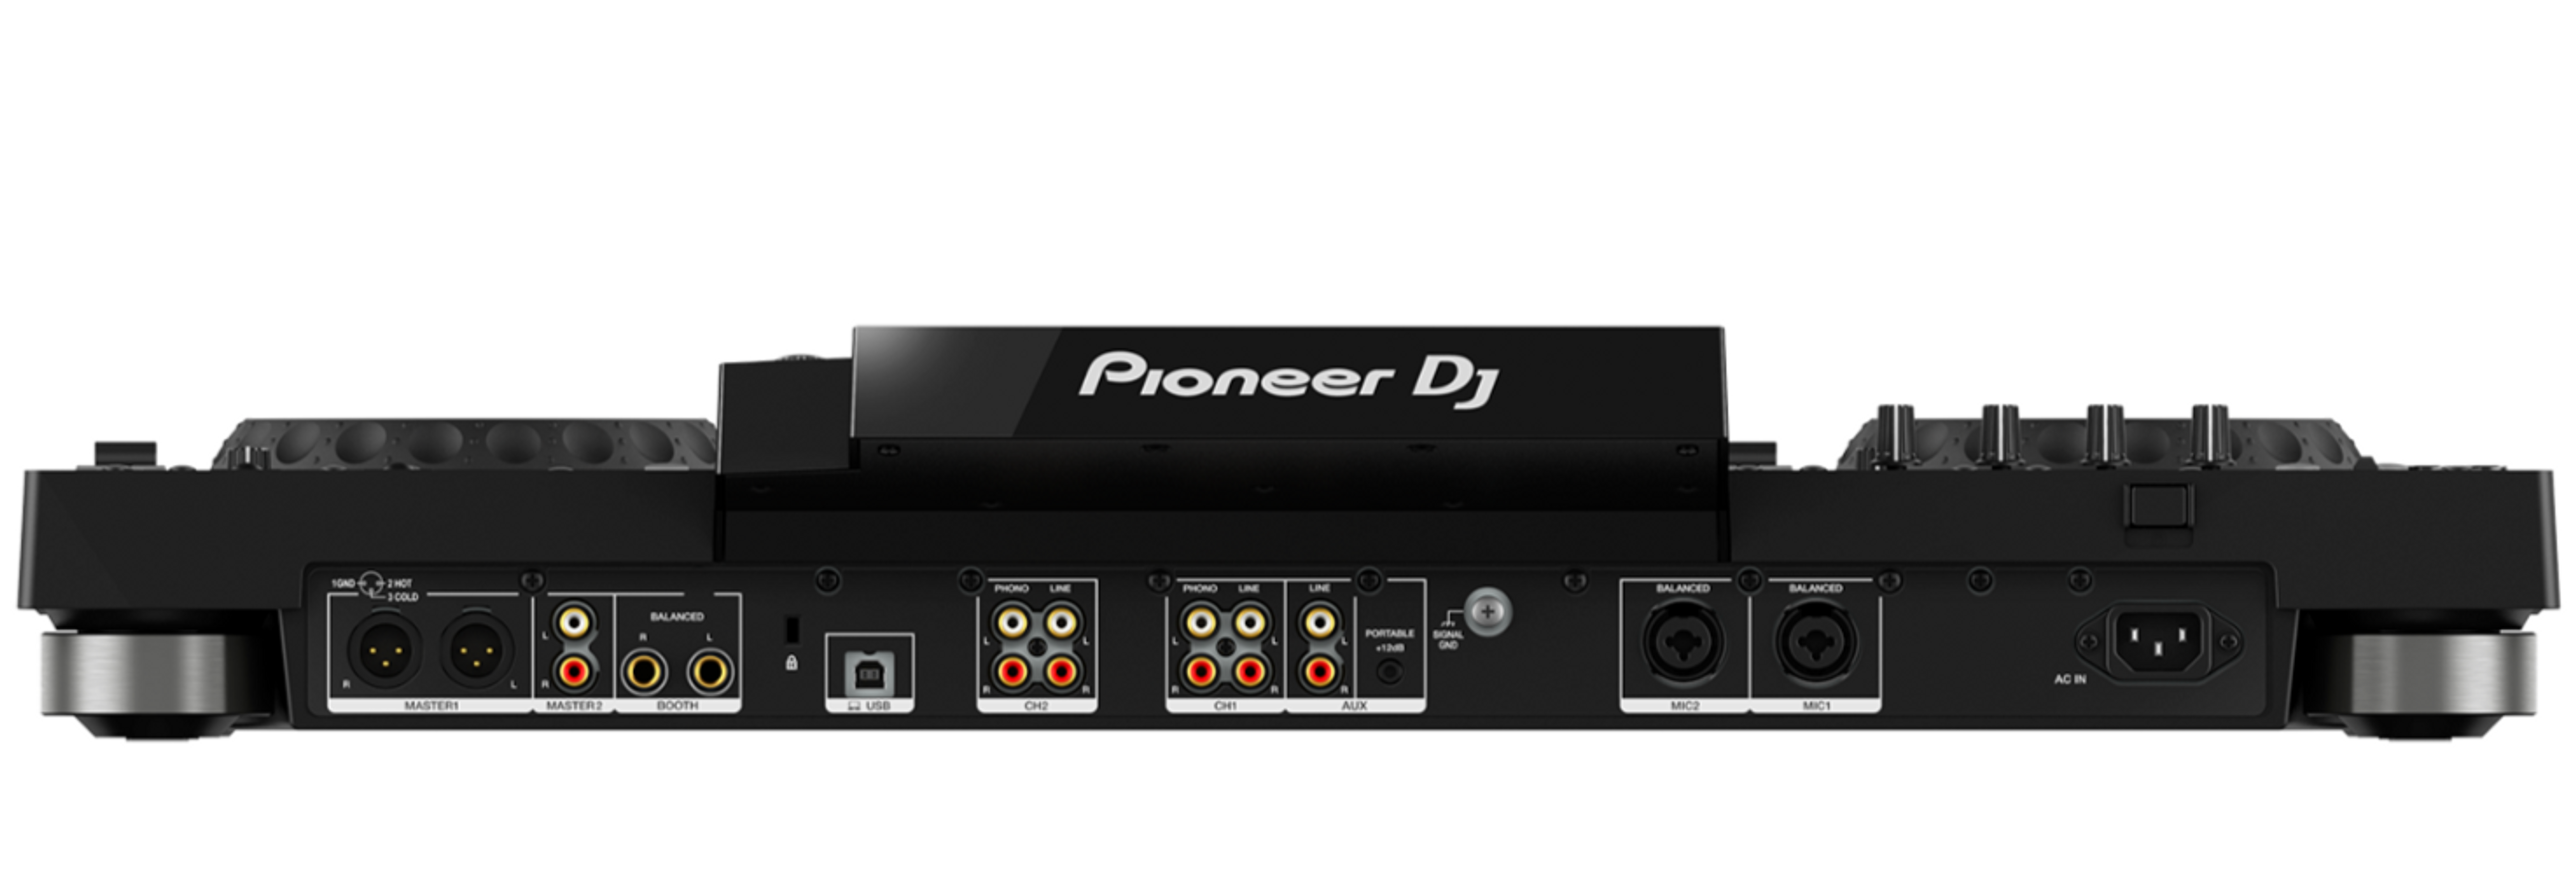 Pioneer DJ XDJ-RX3 2-channel performance all-in-one DJ system (Black)